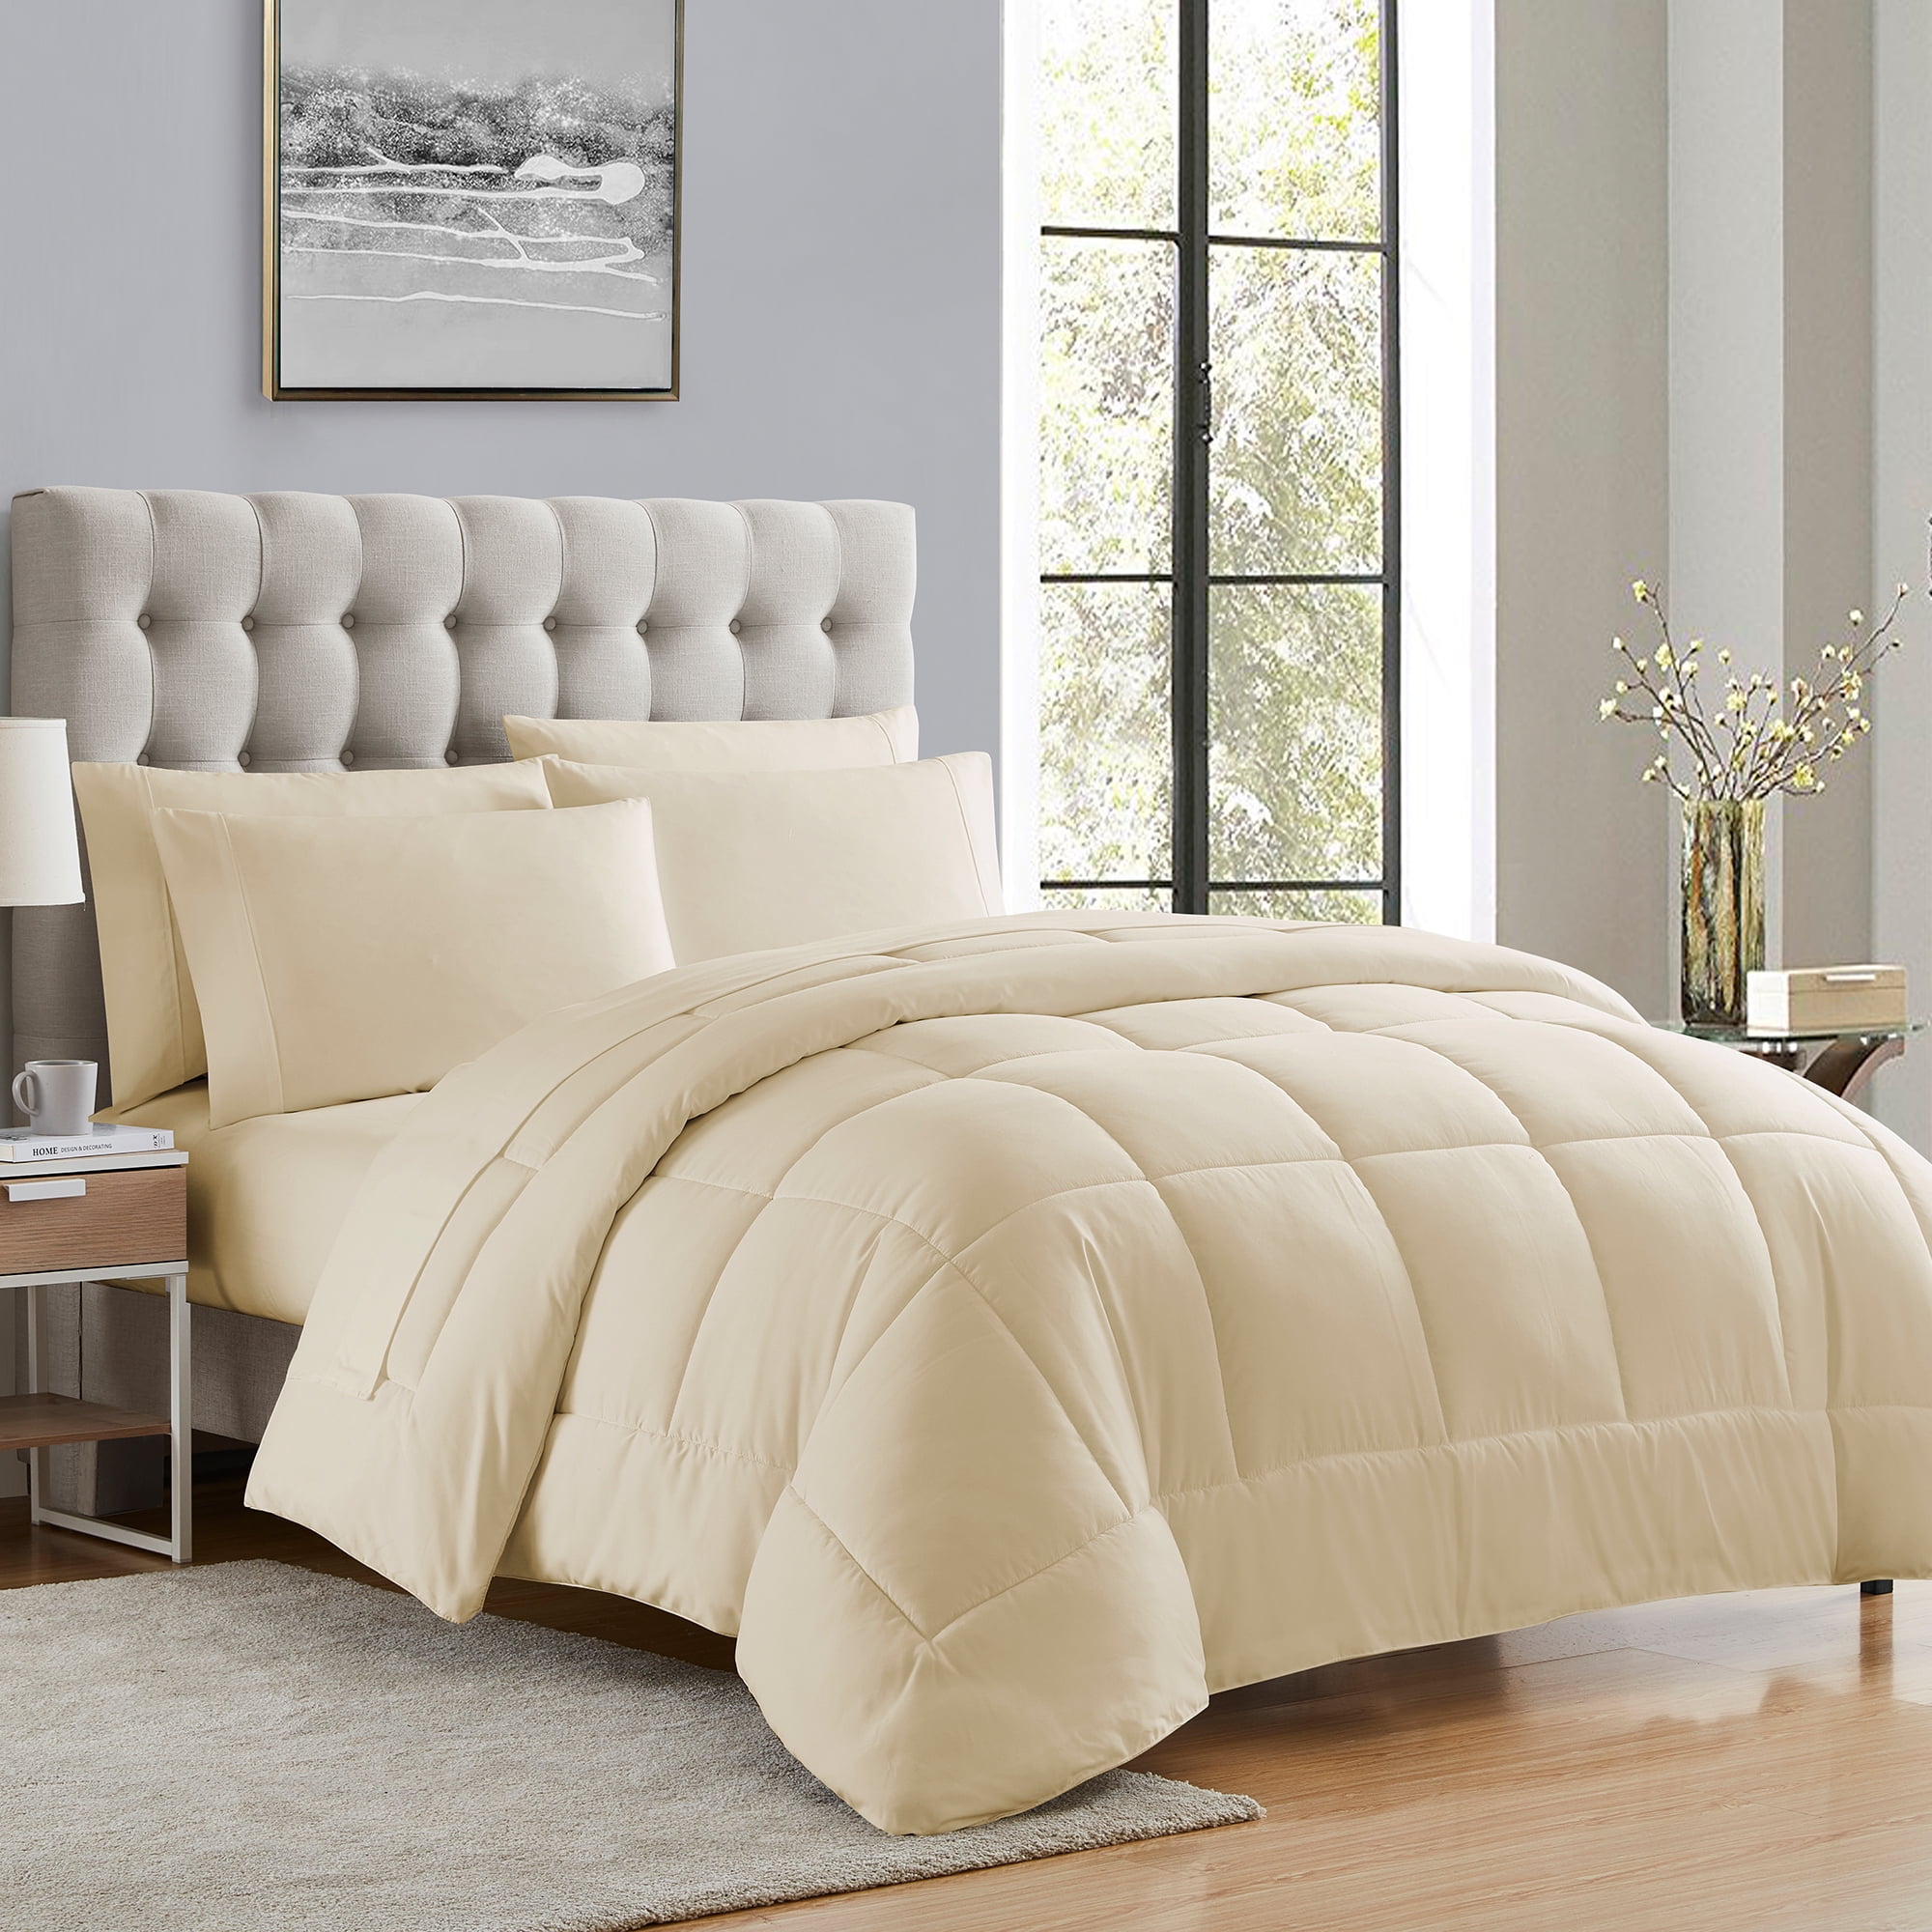 Cream Comforter Twin Xl - How To Blog